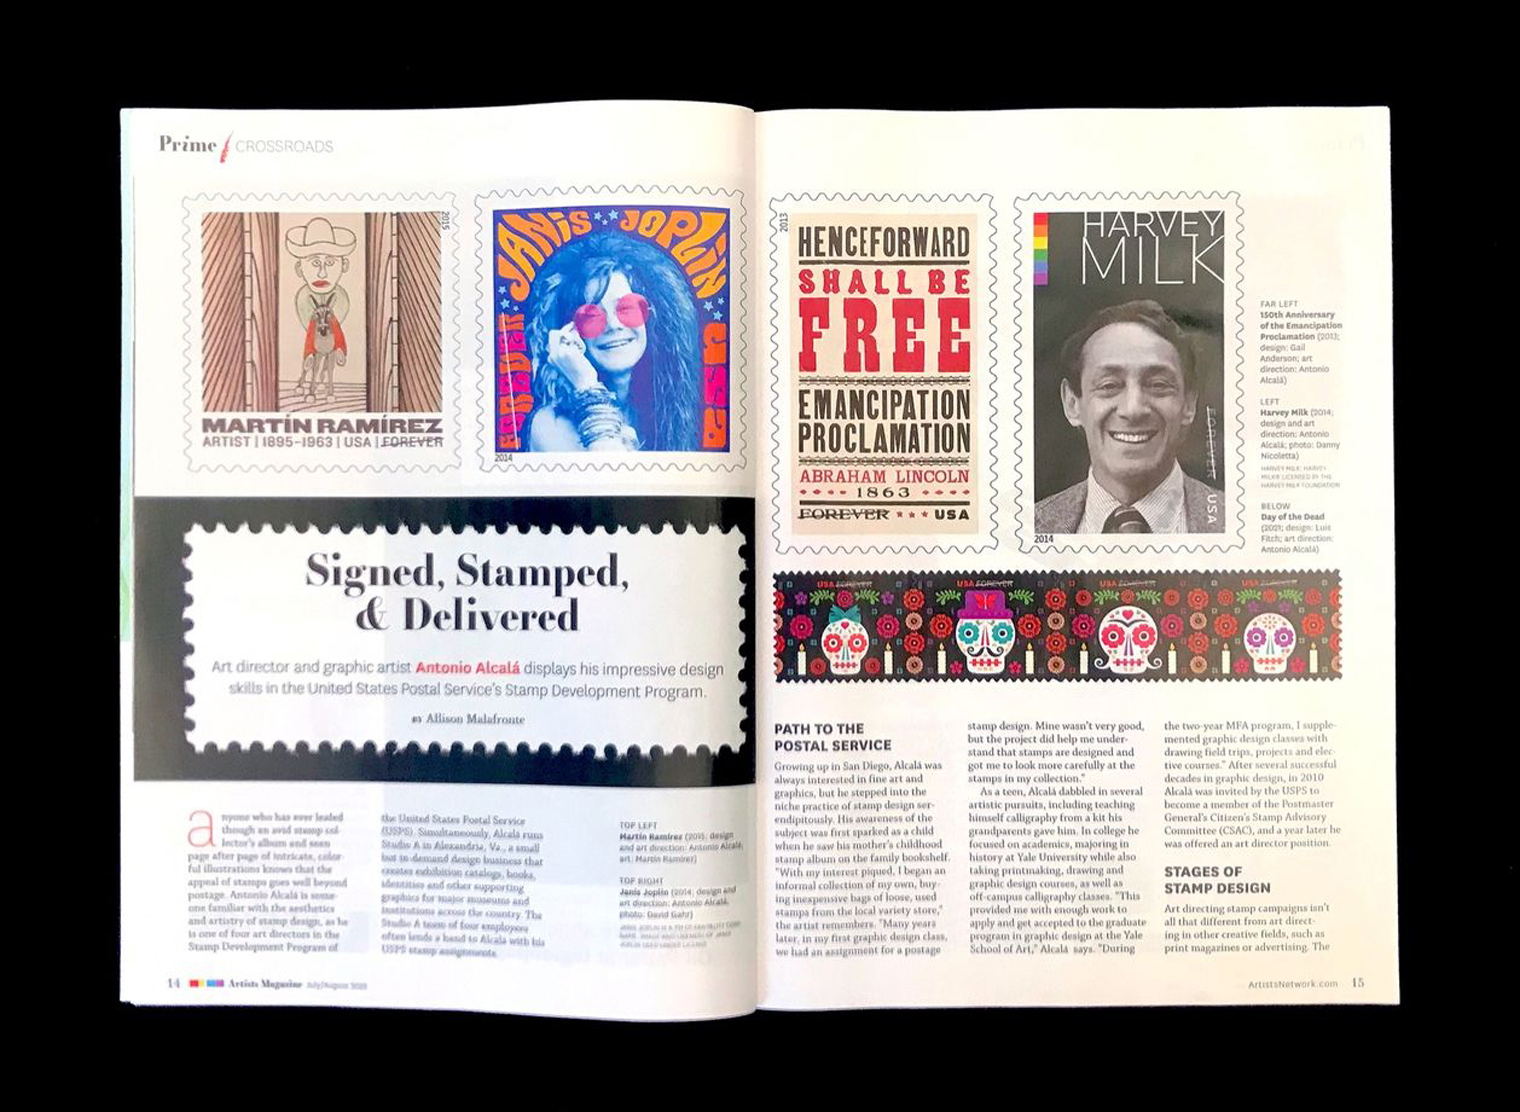 Several stamps art directed by Antonio Alcala including the Martin Ramirez, Janis Joplin, Emancipation Proclamation, Dia de los Muertos, and Harvey Milk